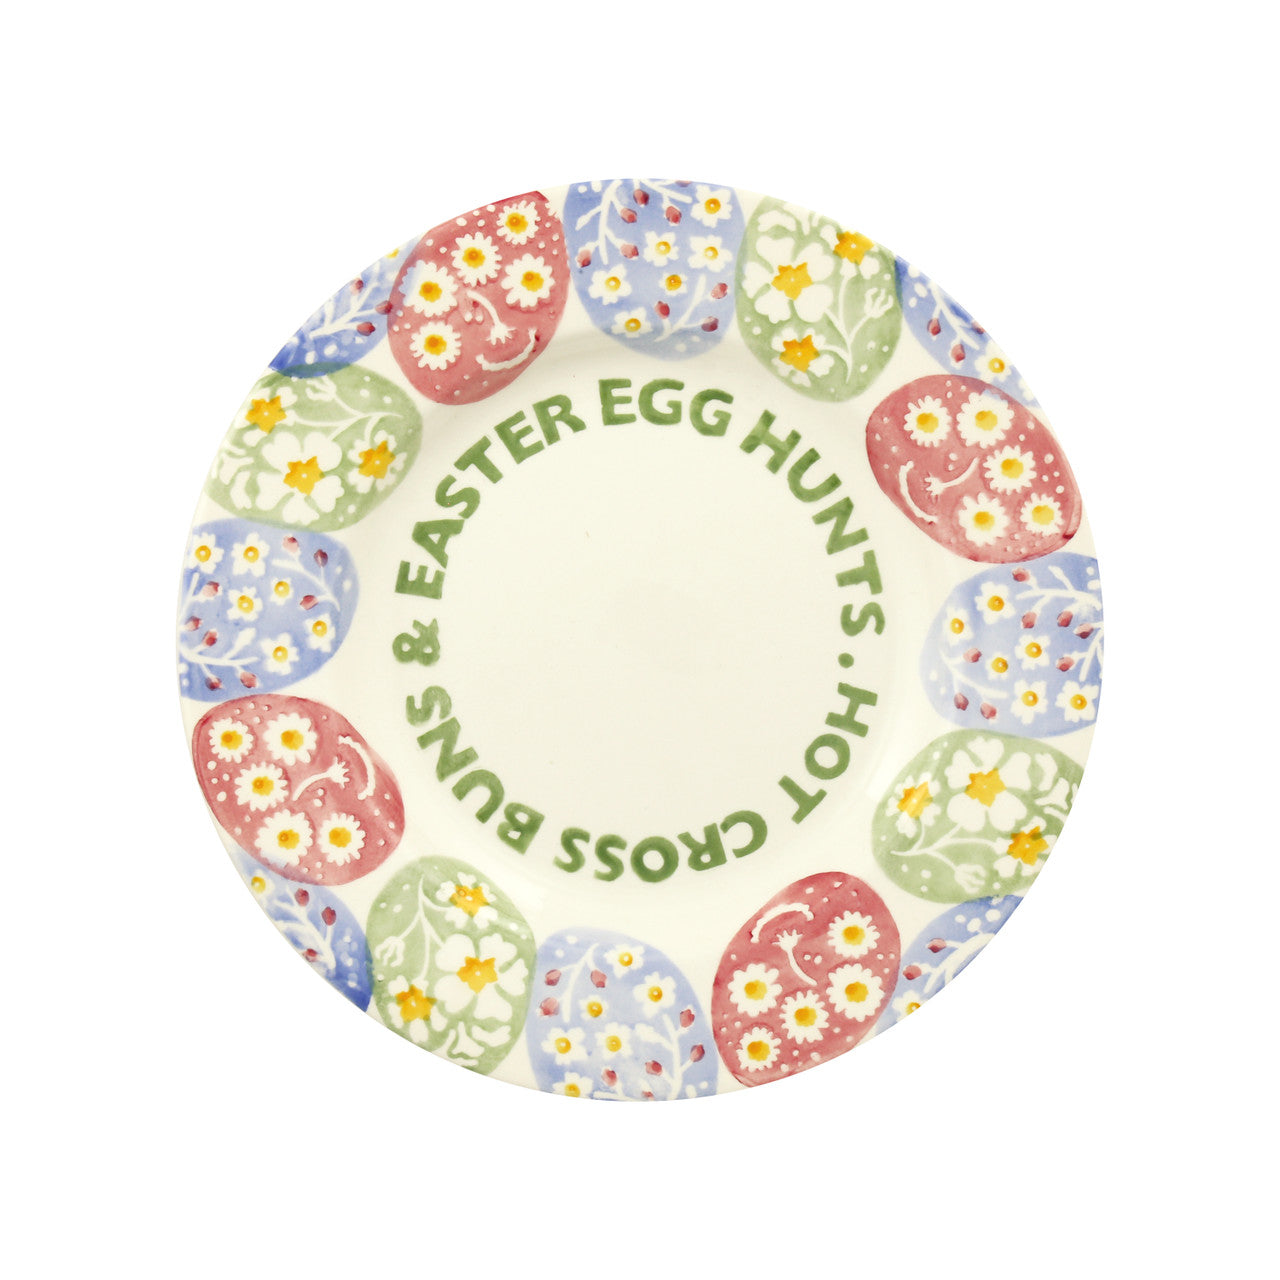 Emma Bridgewater Easter Egg Hunt Hot Cross Buns 8 1/2 inch plate. Handmade in England.